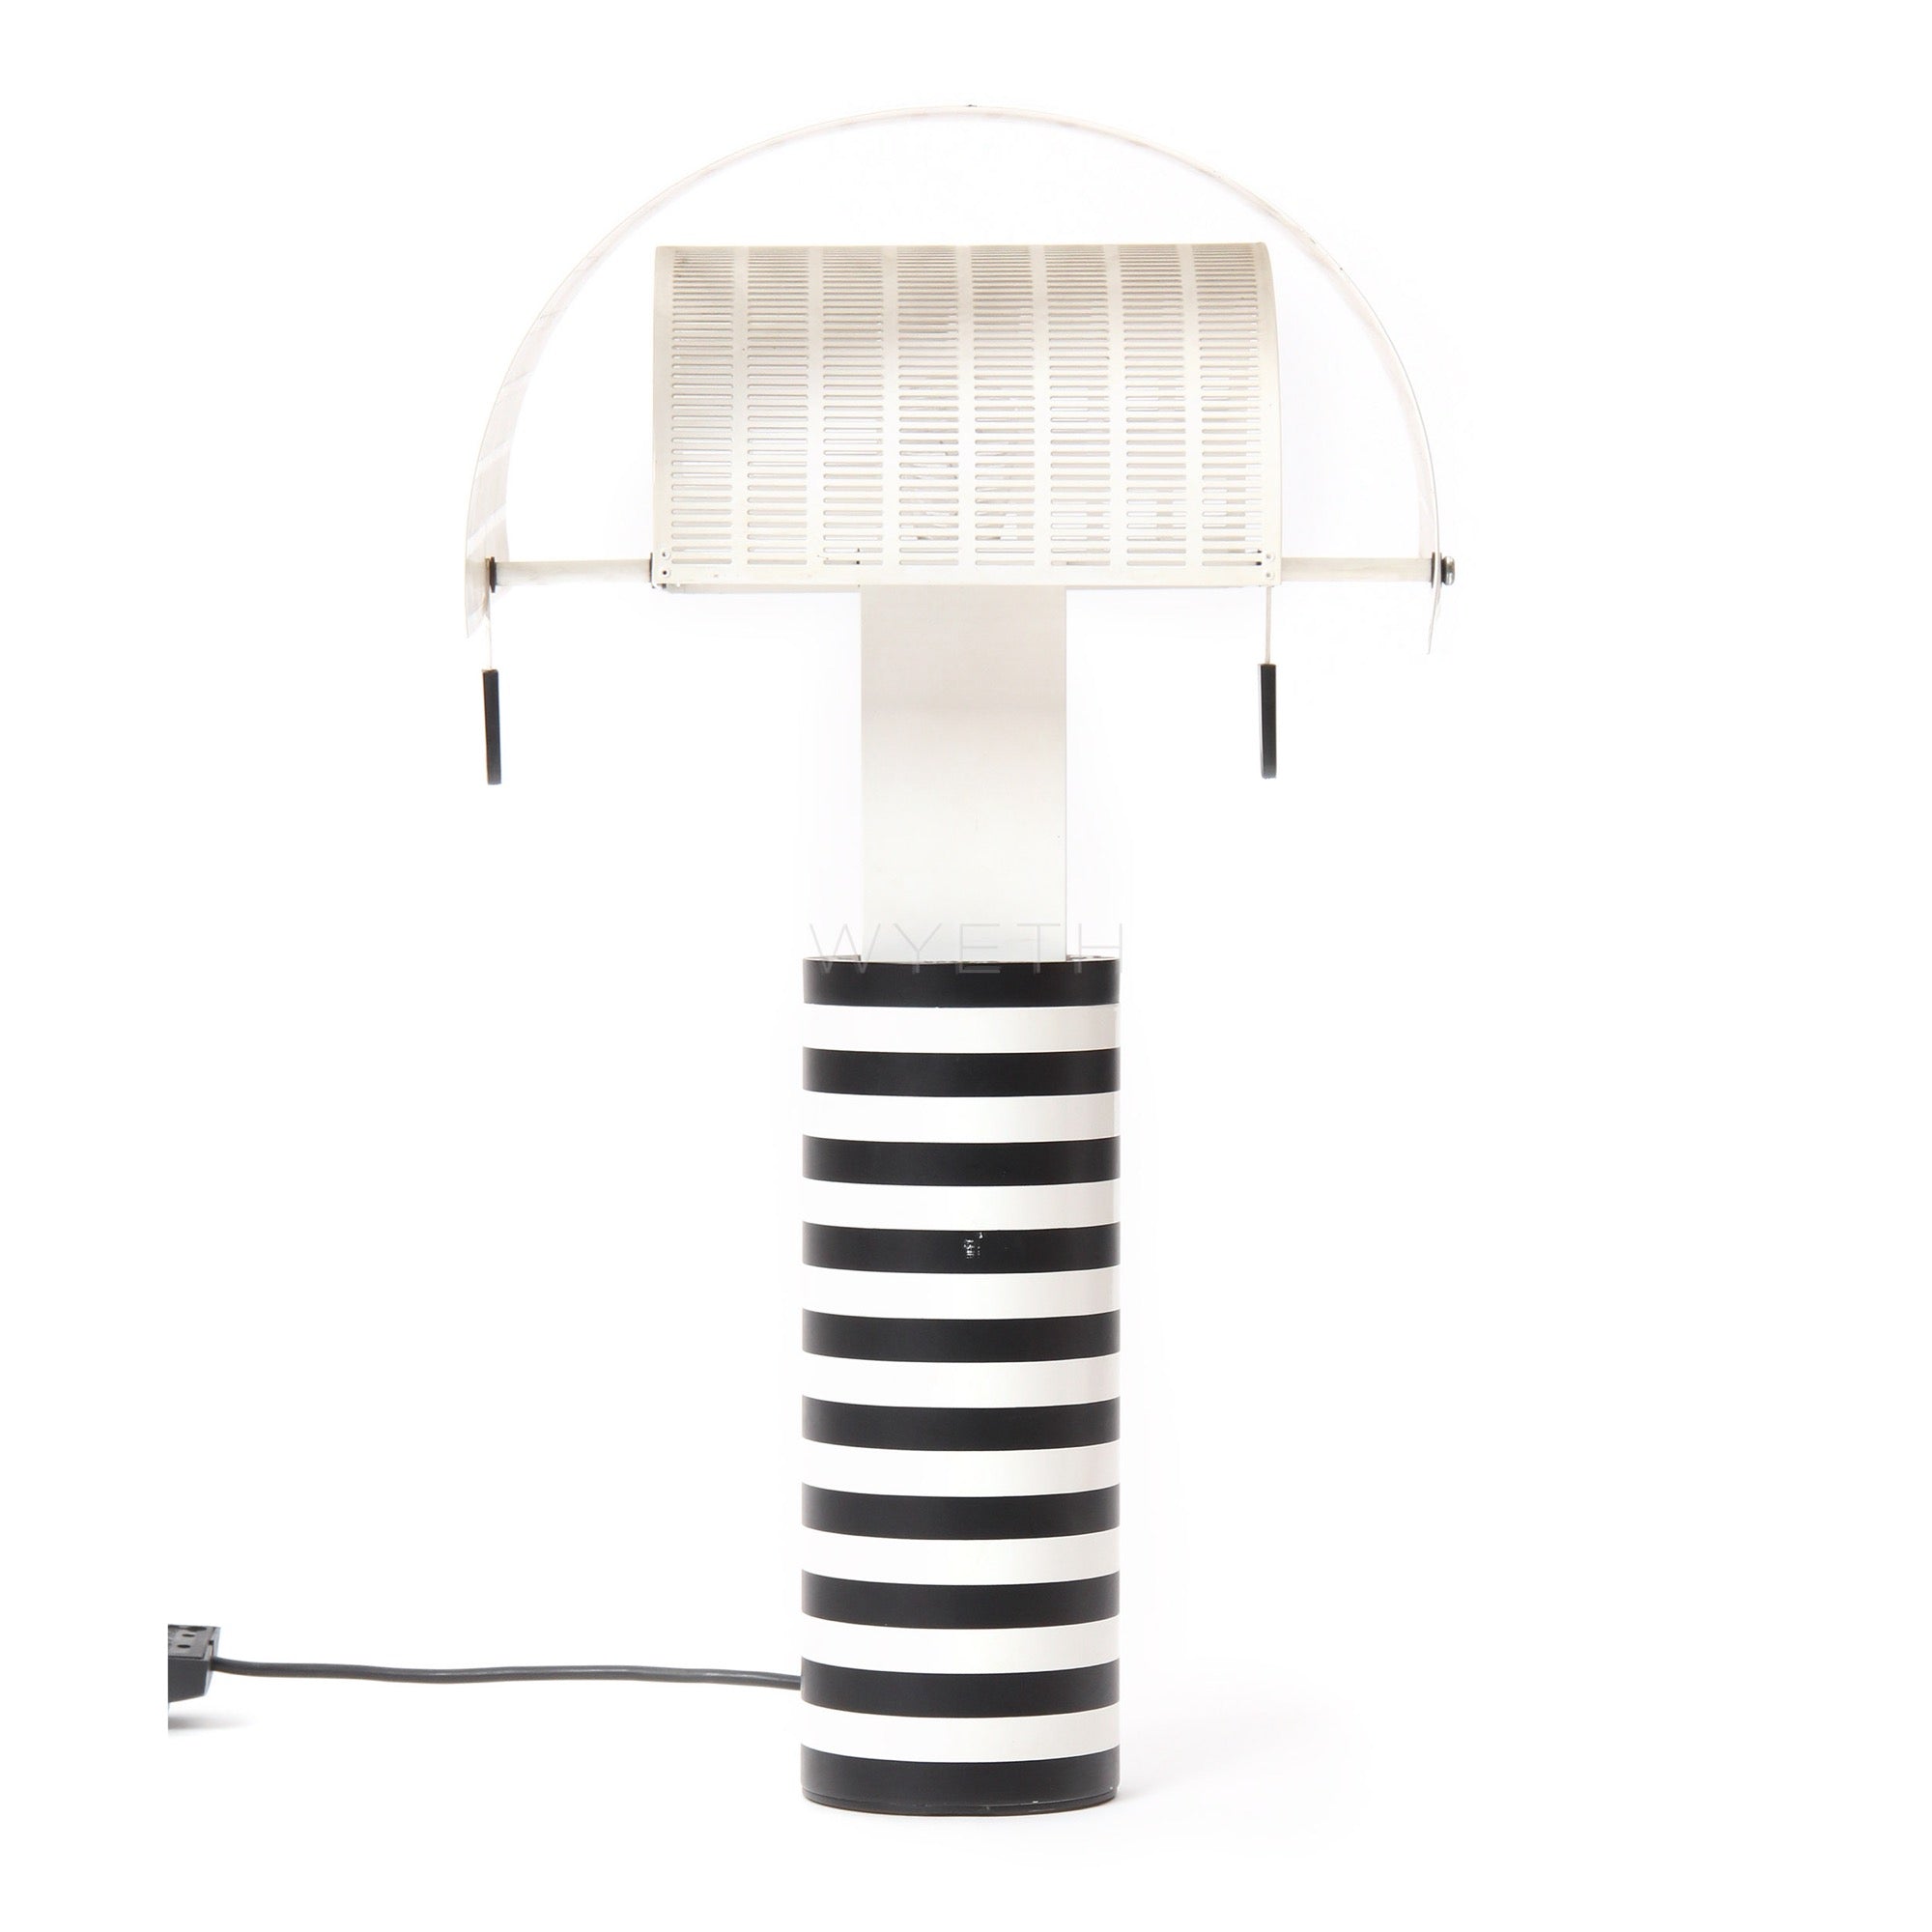 Pivoting 'Shogun' Table Lamp by Mario Botta for Artemide